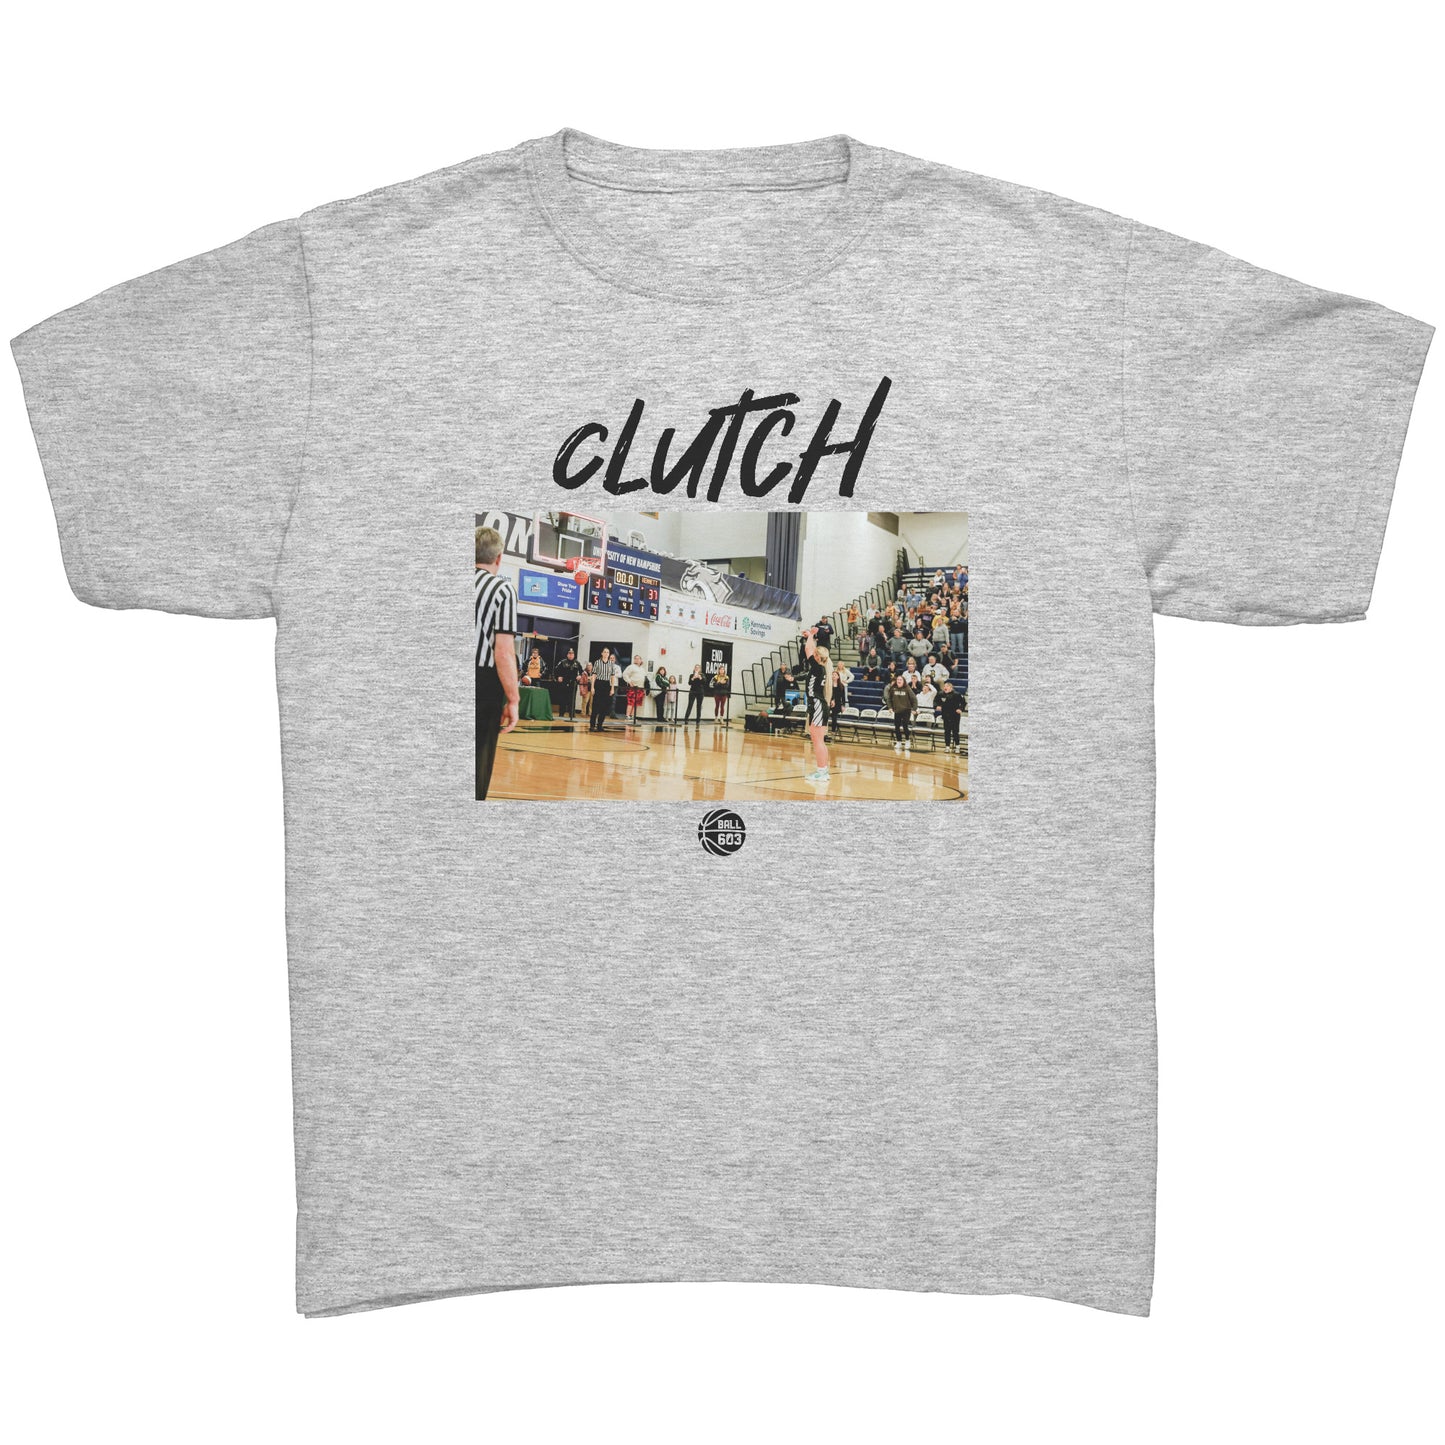 Clutch: Youth T-Shirt